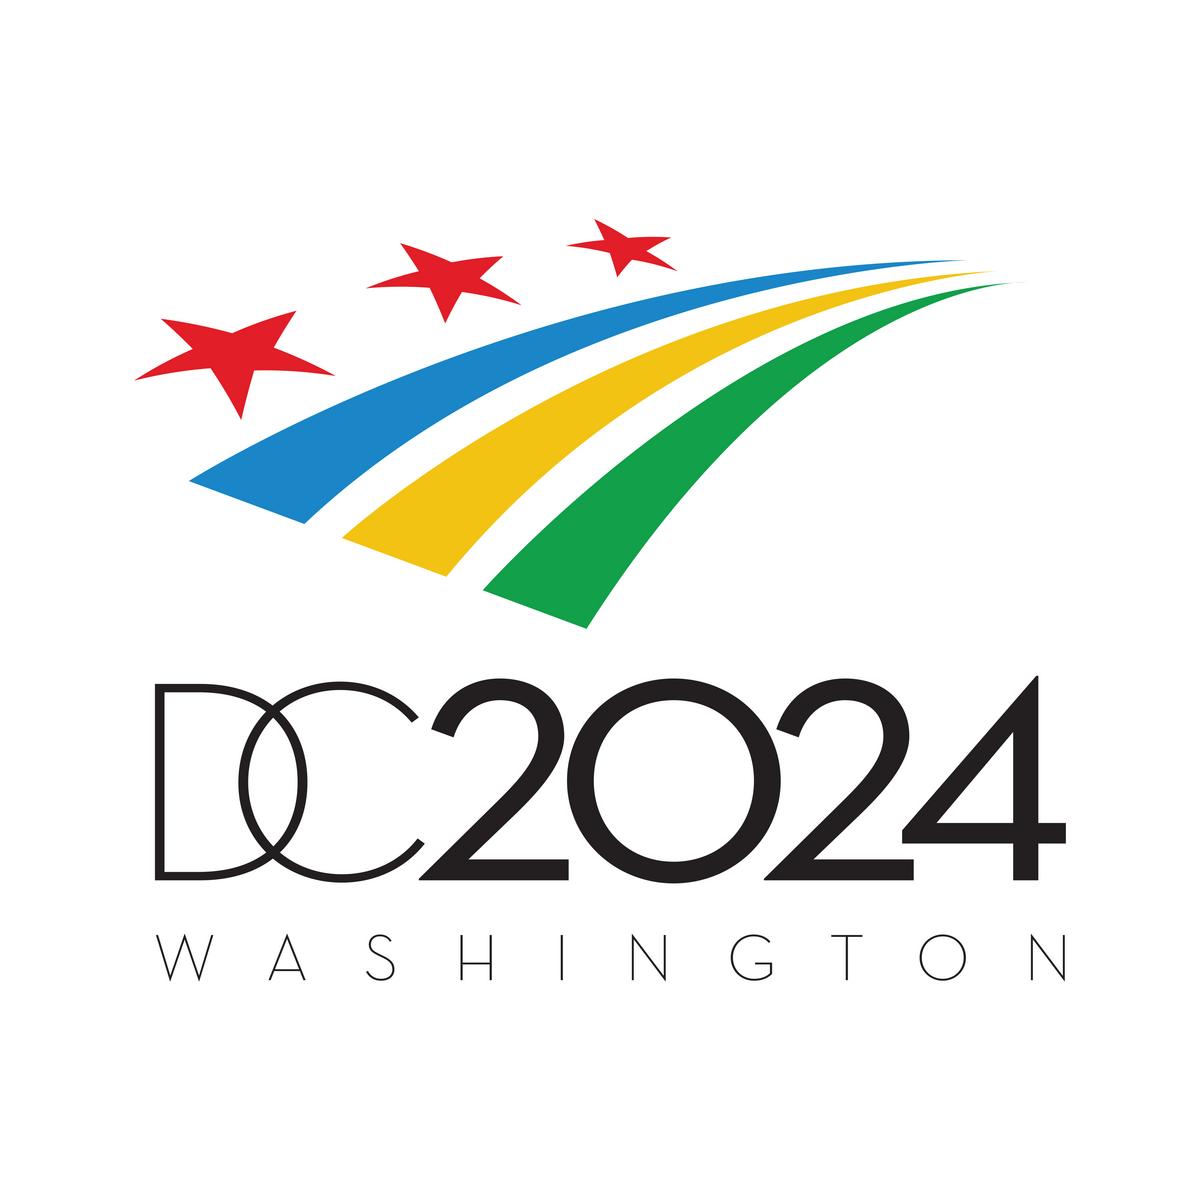 D.C. 2024's low-key Olympic announcement - Washington Business Journal